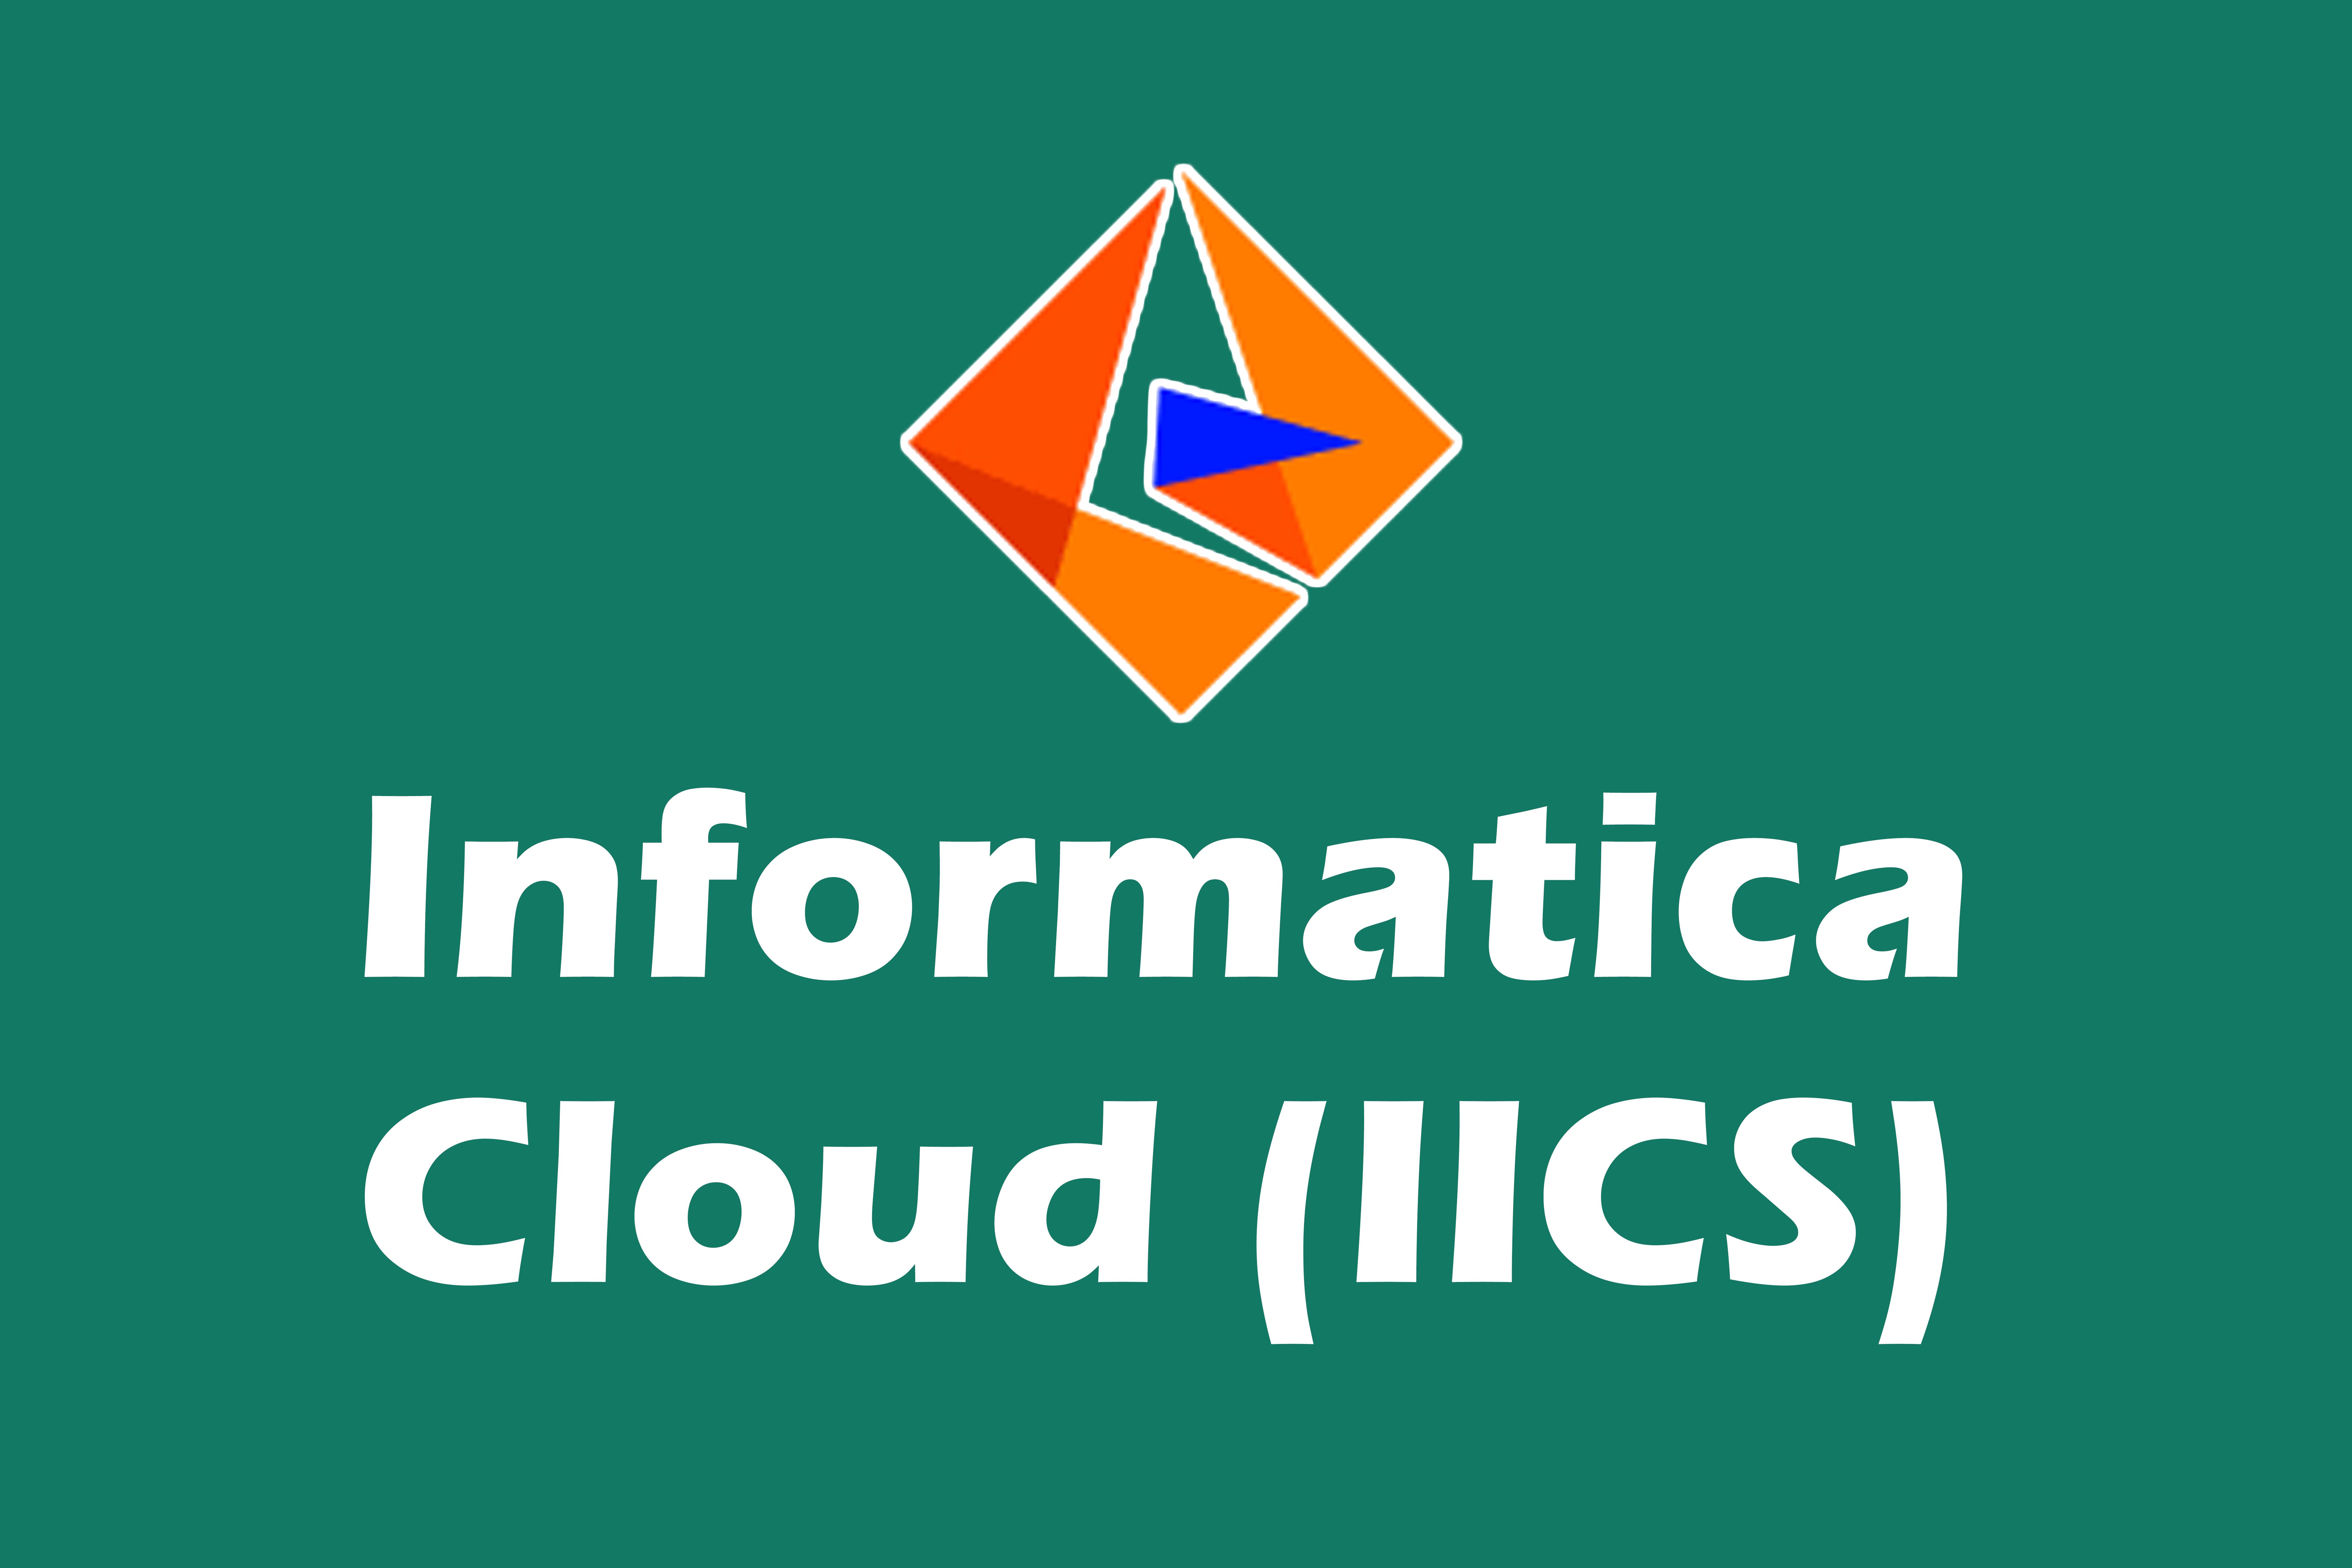 Informatica Cloud training in hyderabad